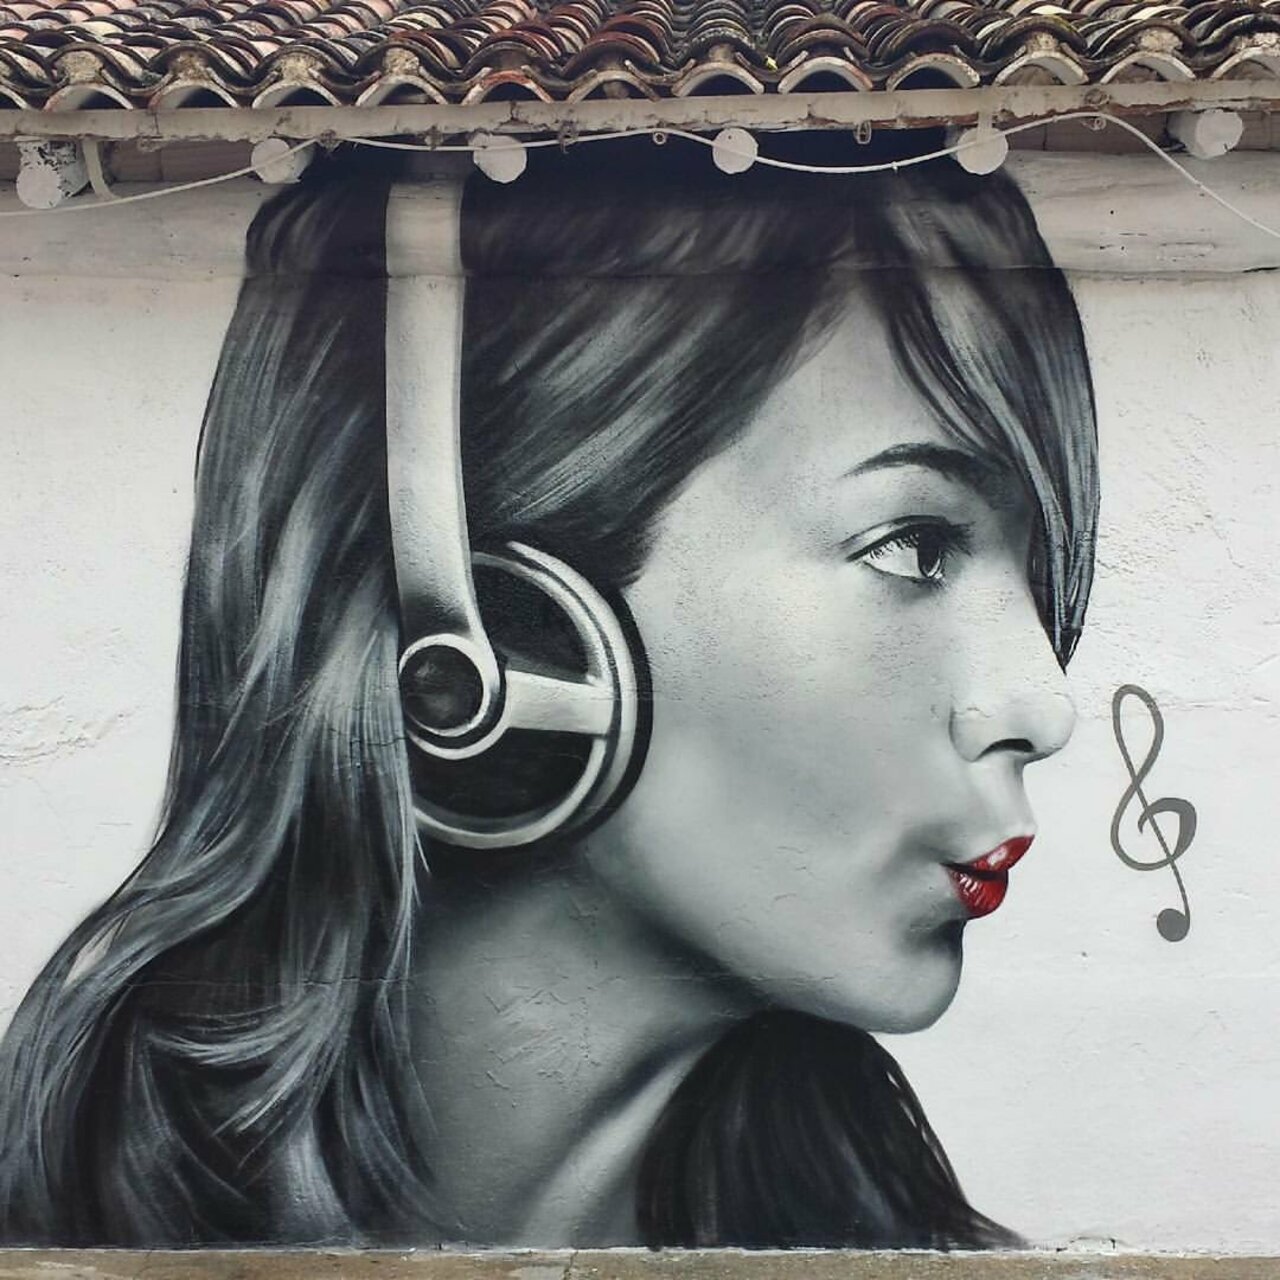 Xolaka Street Art   Valencia Spain 🇪🇸 #art #mural #graffiti #streetart https://t.co/HOFOZJVbXV